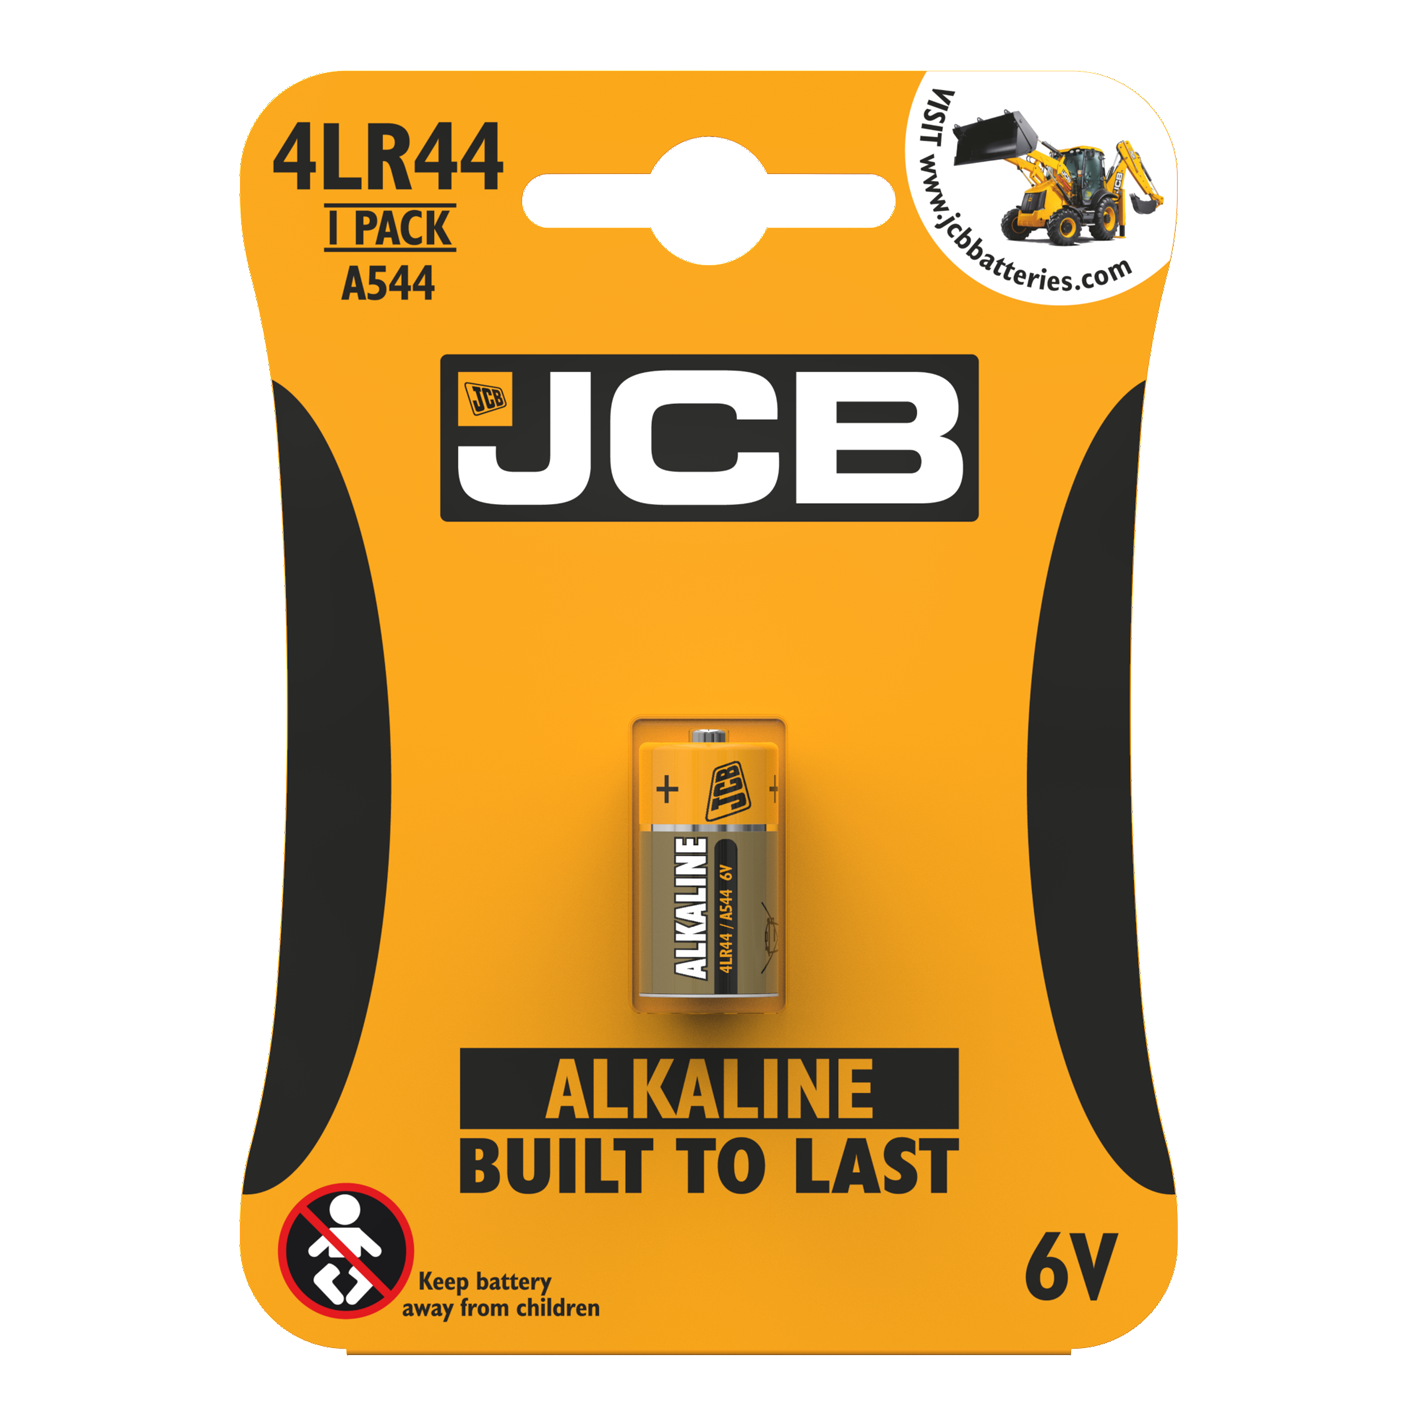 JCB 4LR44 alcalino, paquete de 1